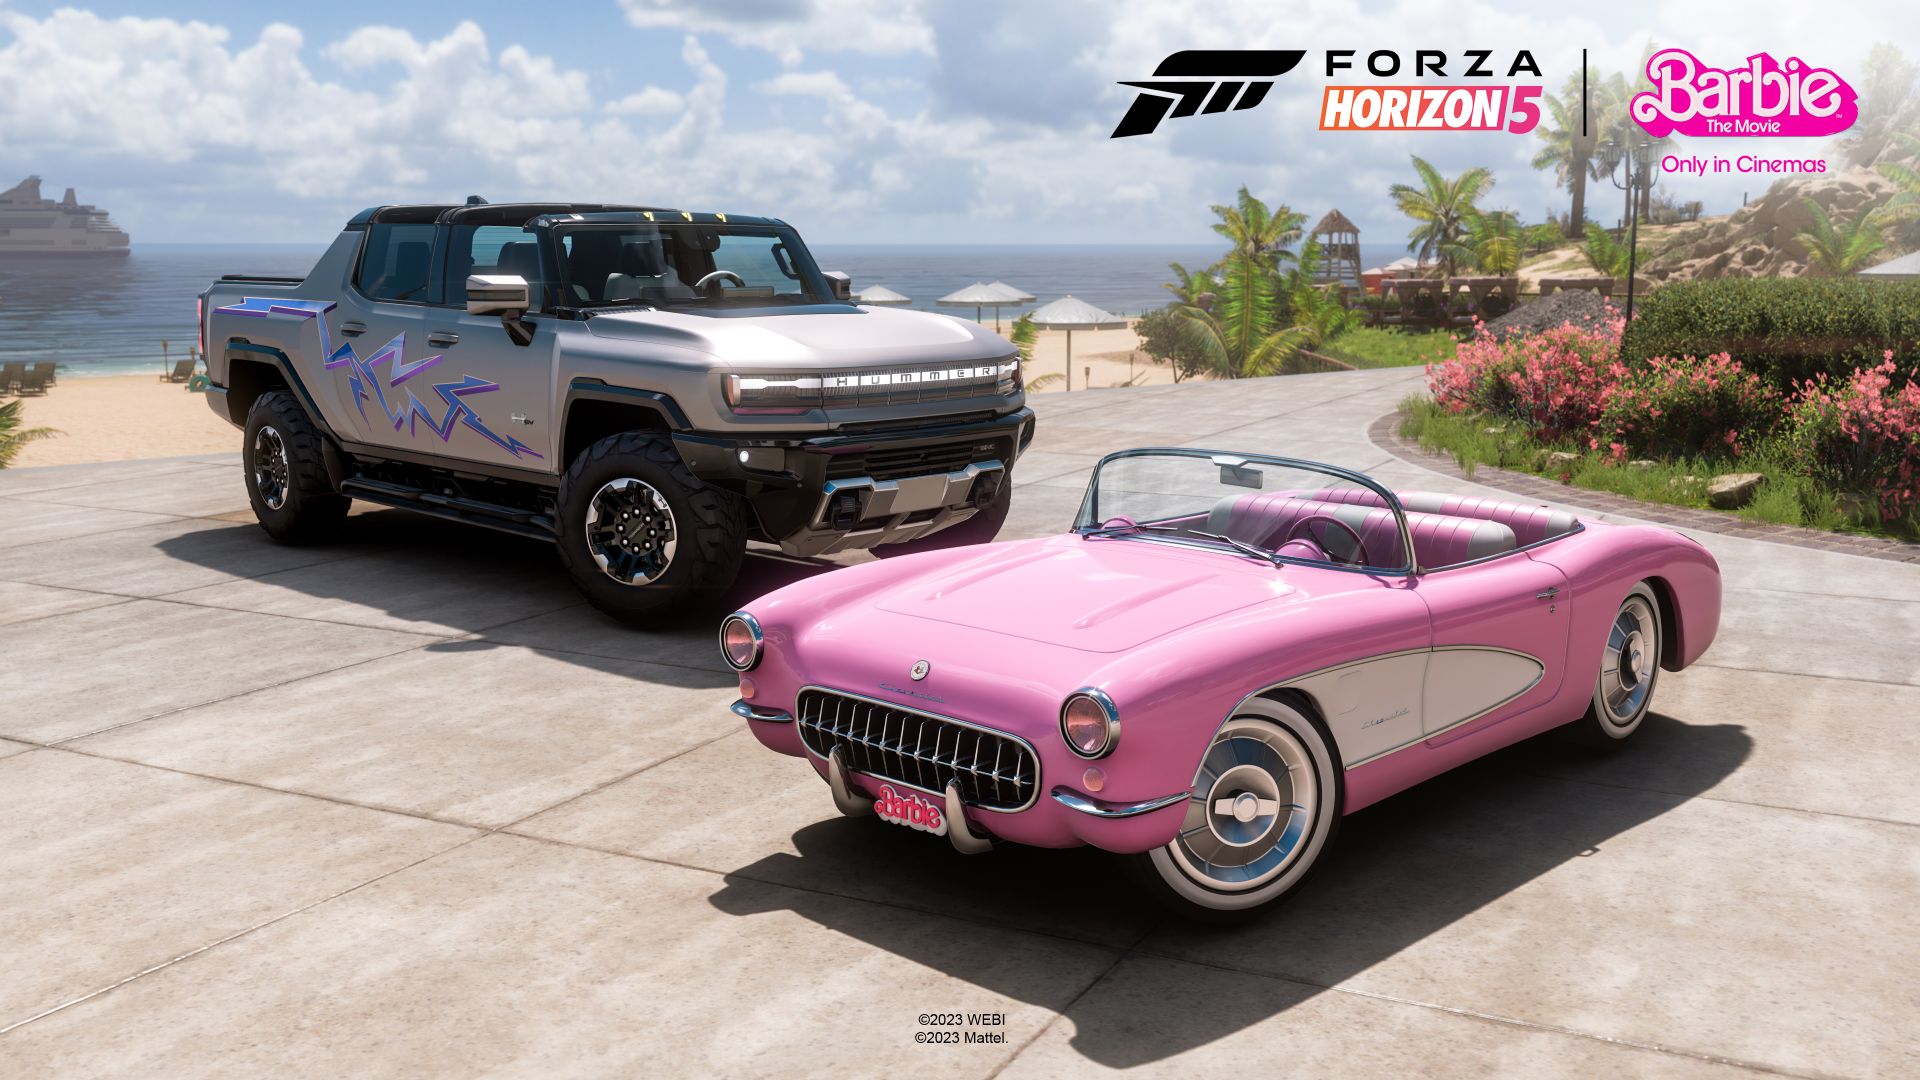 Race like Barbie and Ken in Forza Horizon 5